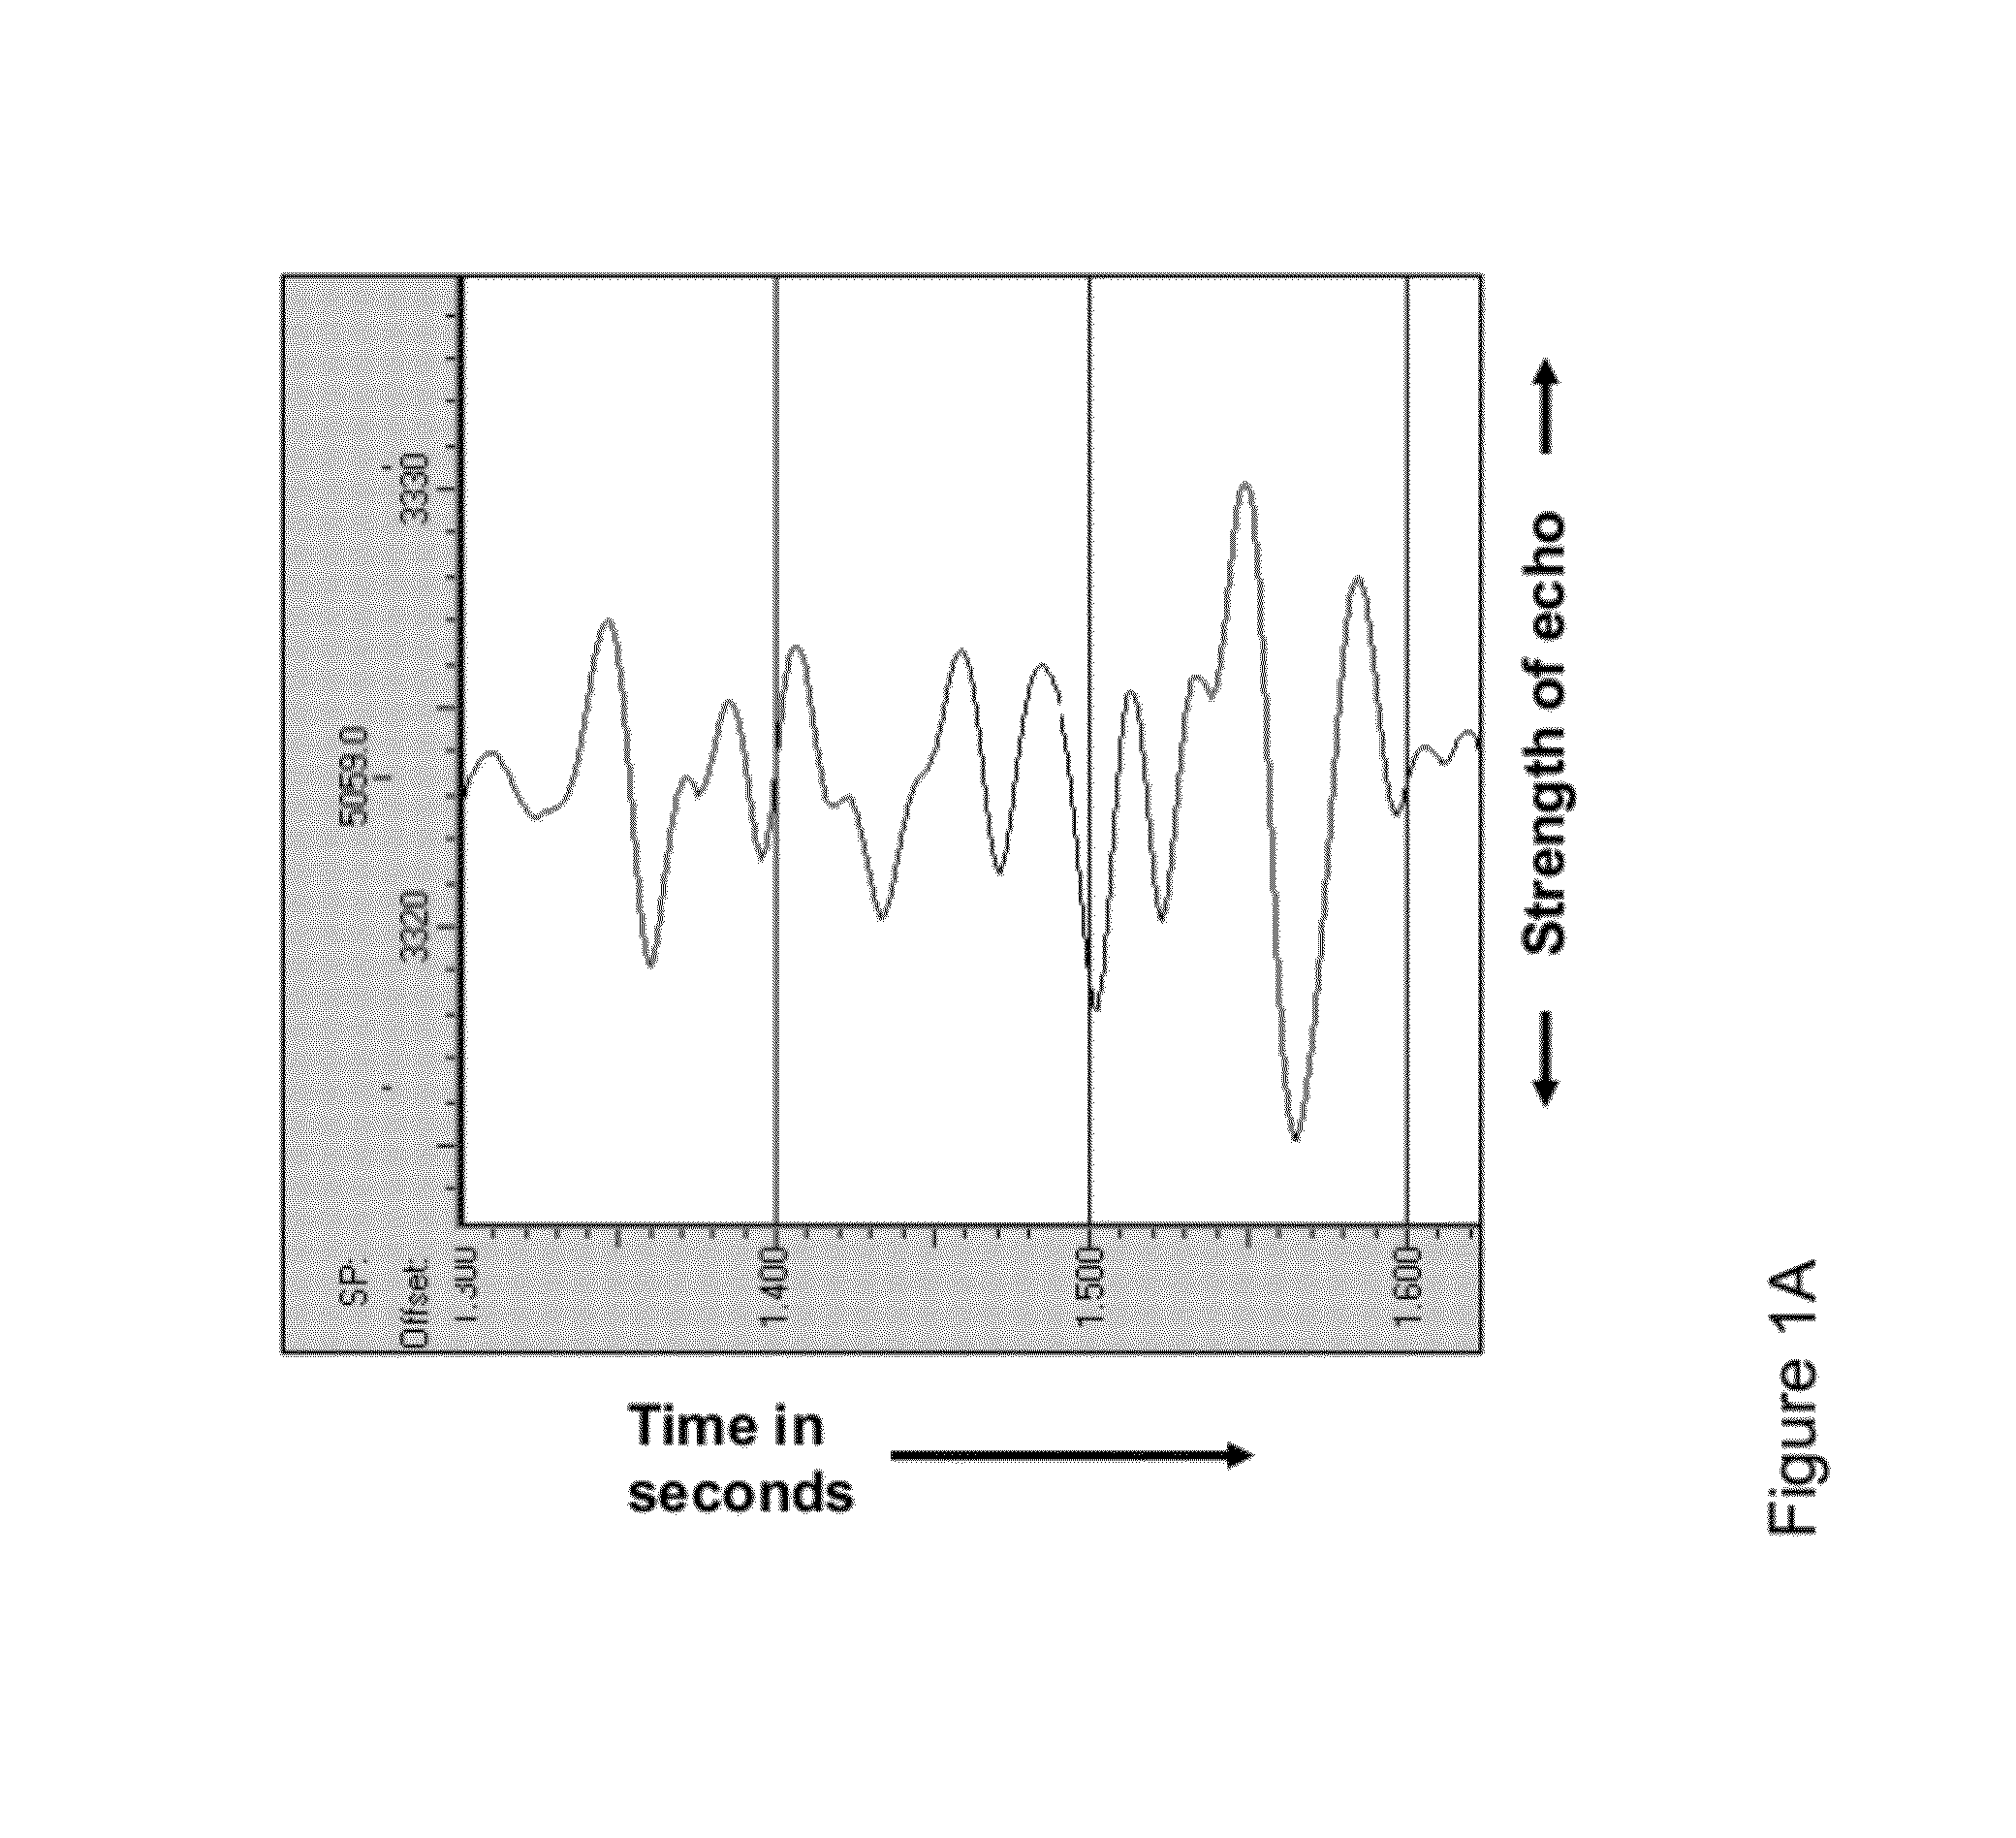 Seismic horizon autopicking using orientation vector field